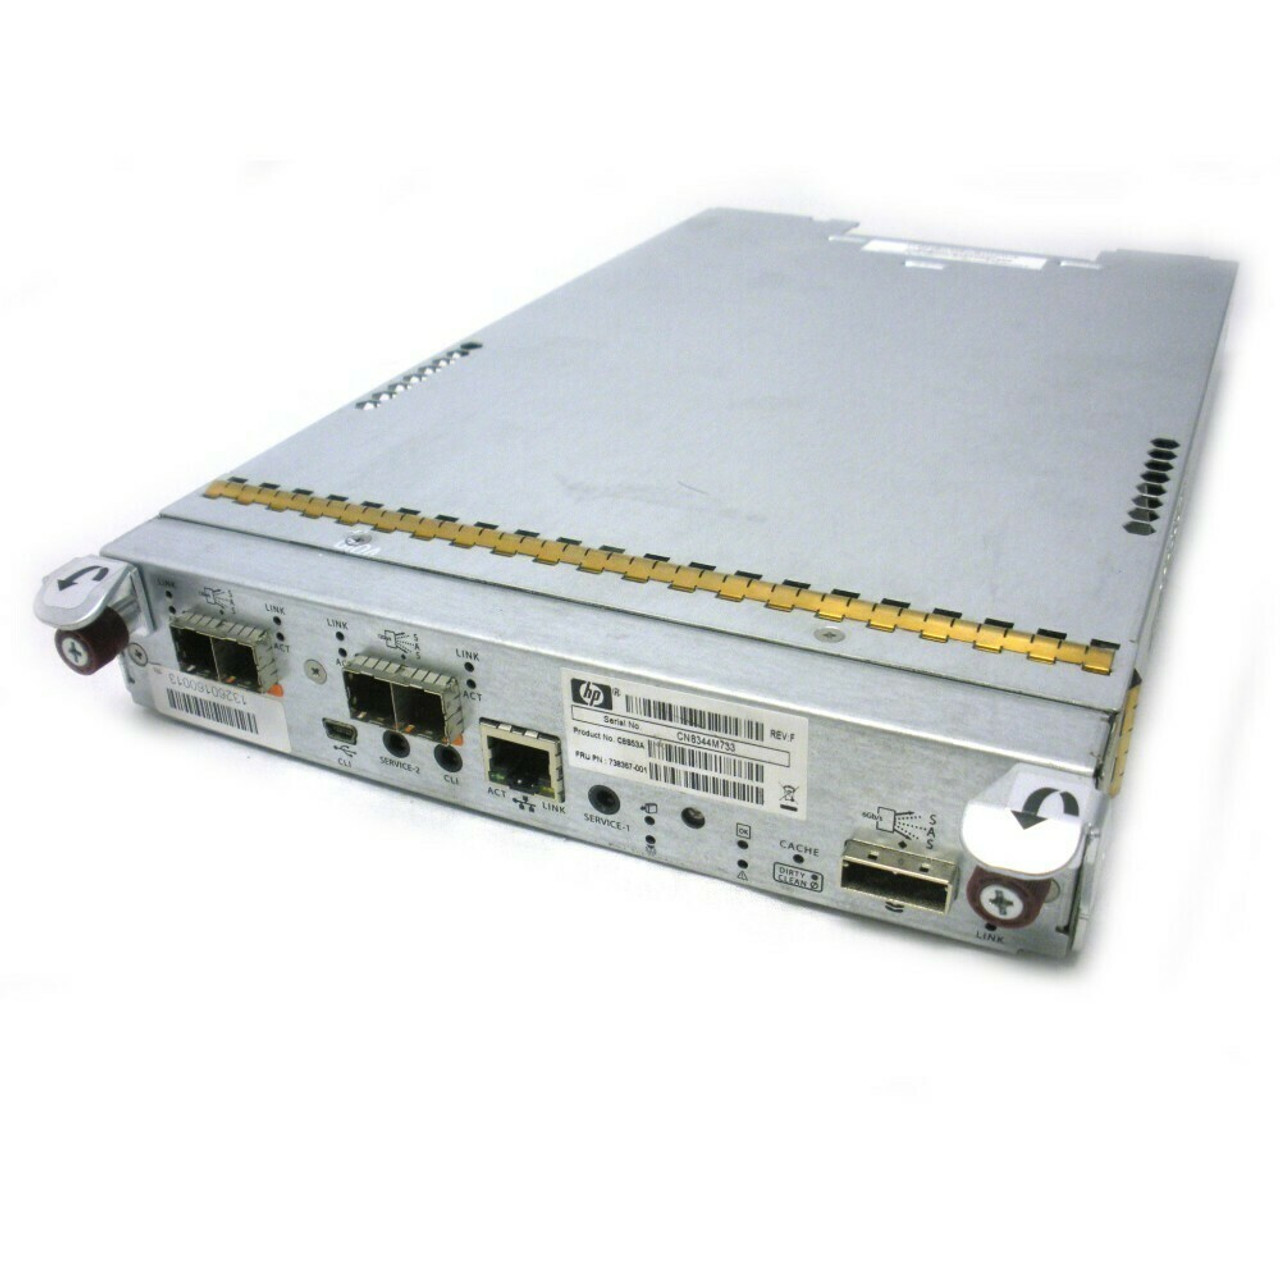 HPE MSA 2040 Storage Controllers